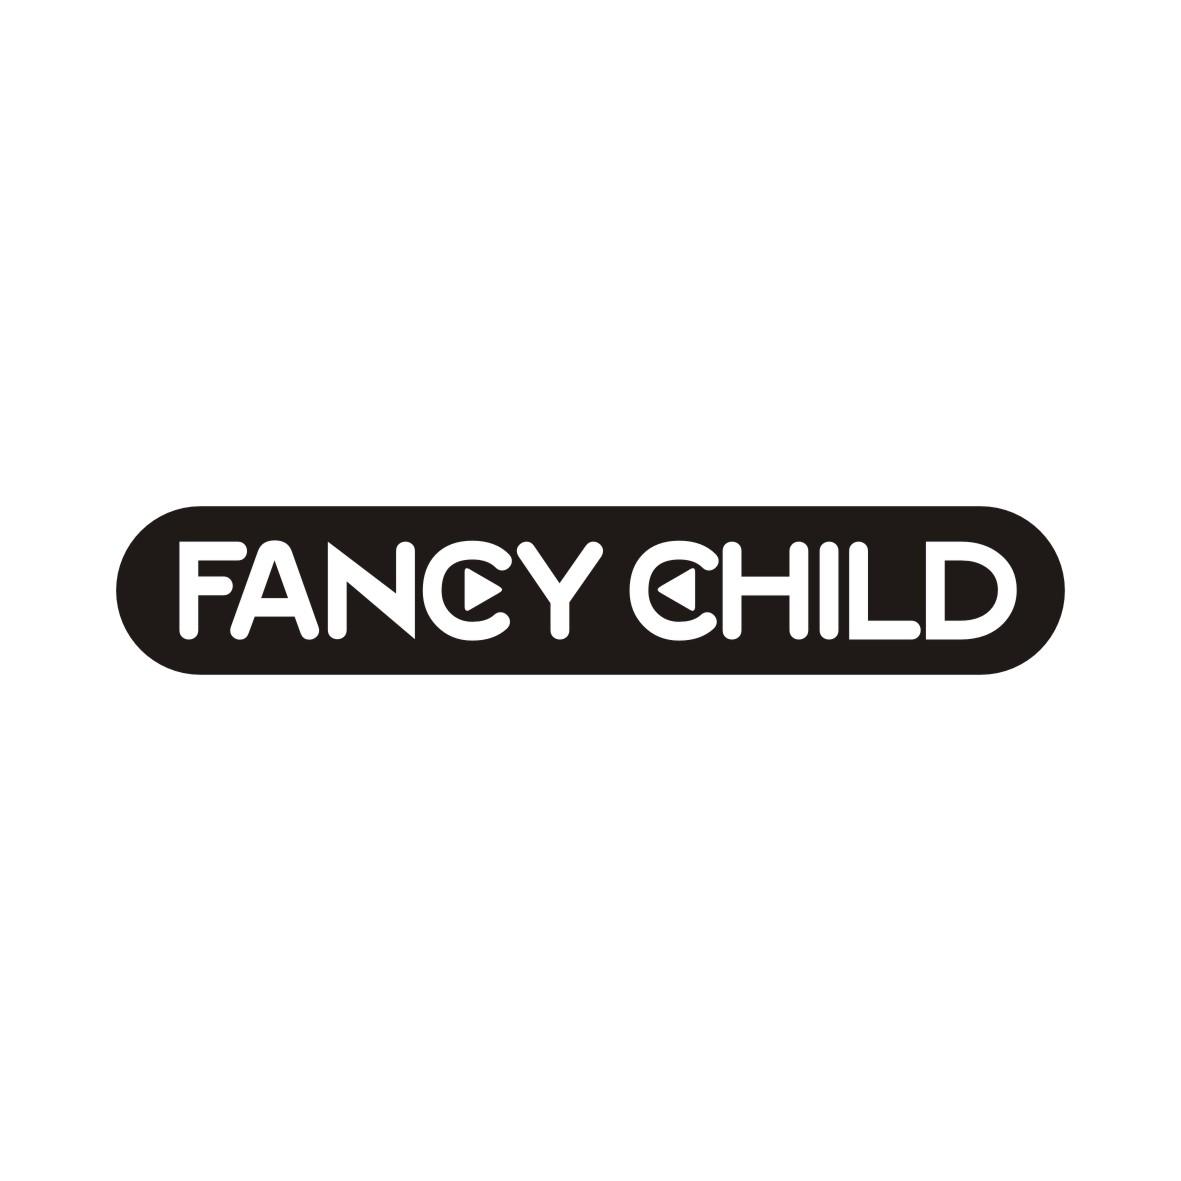 FANCY CHILD对讲机商标转让费用买卖交易流程